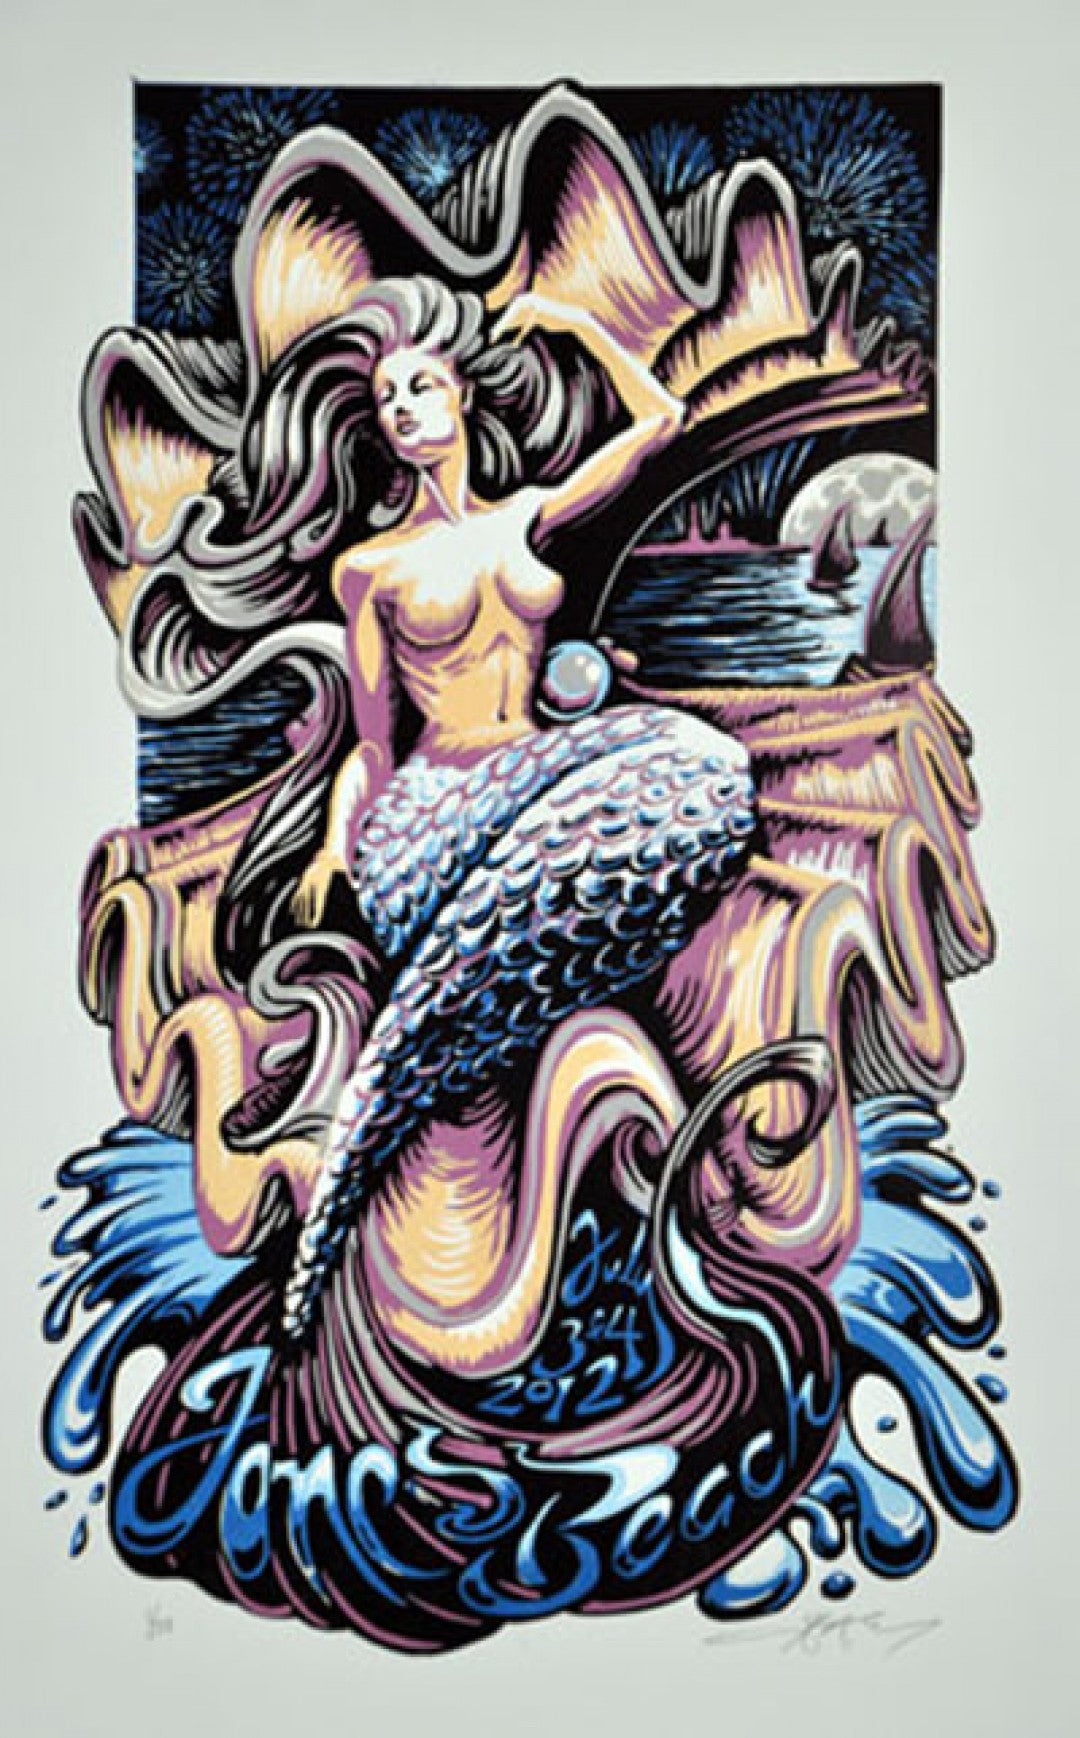 AJ Masthay "Jones Beach Mermaid" - Framed